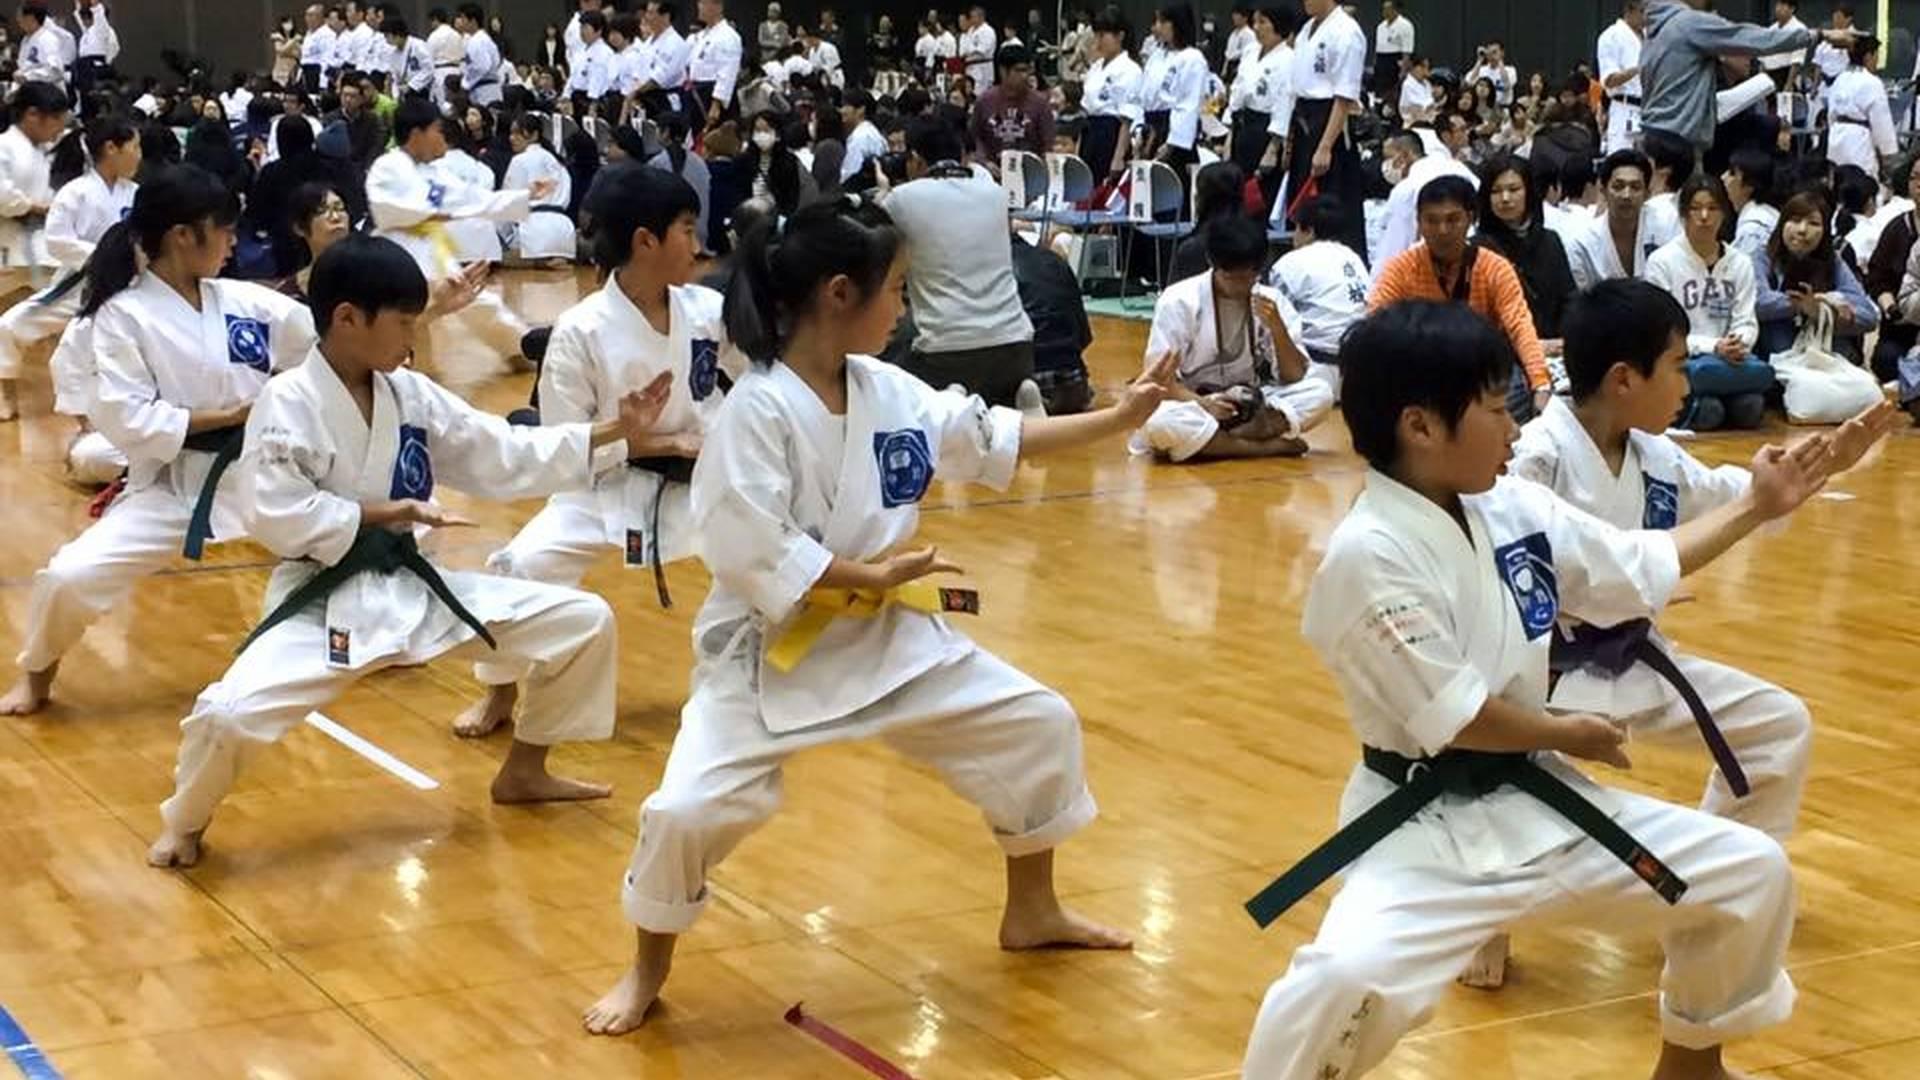 The Reiwaryu Ryushinkan School Of Karate photo